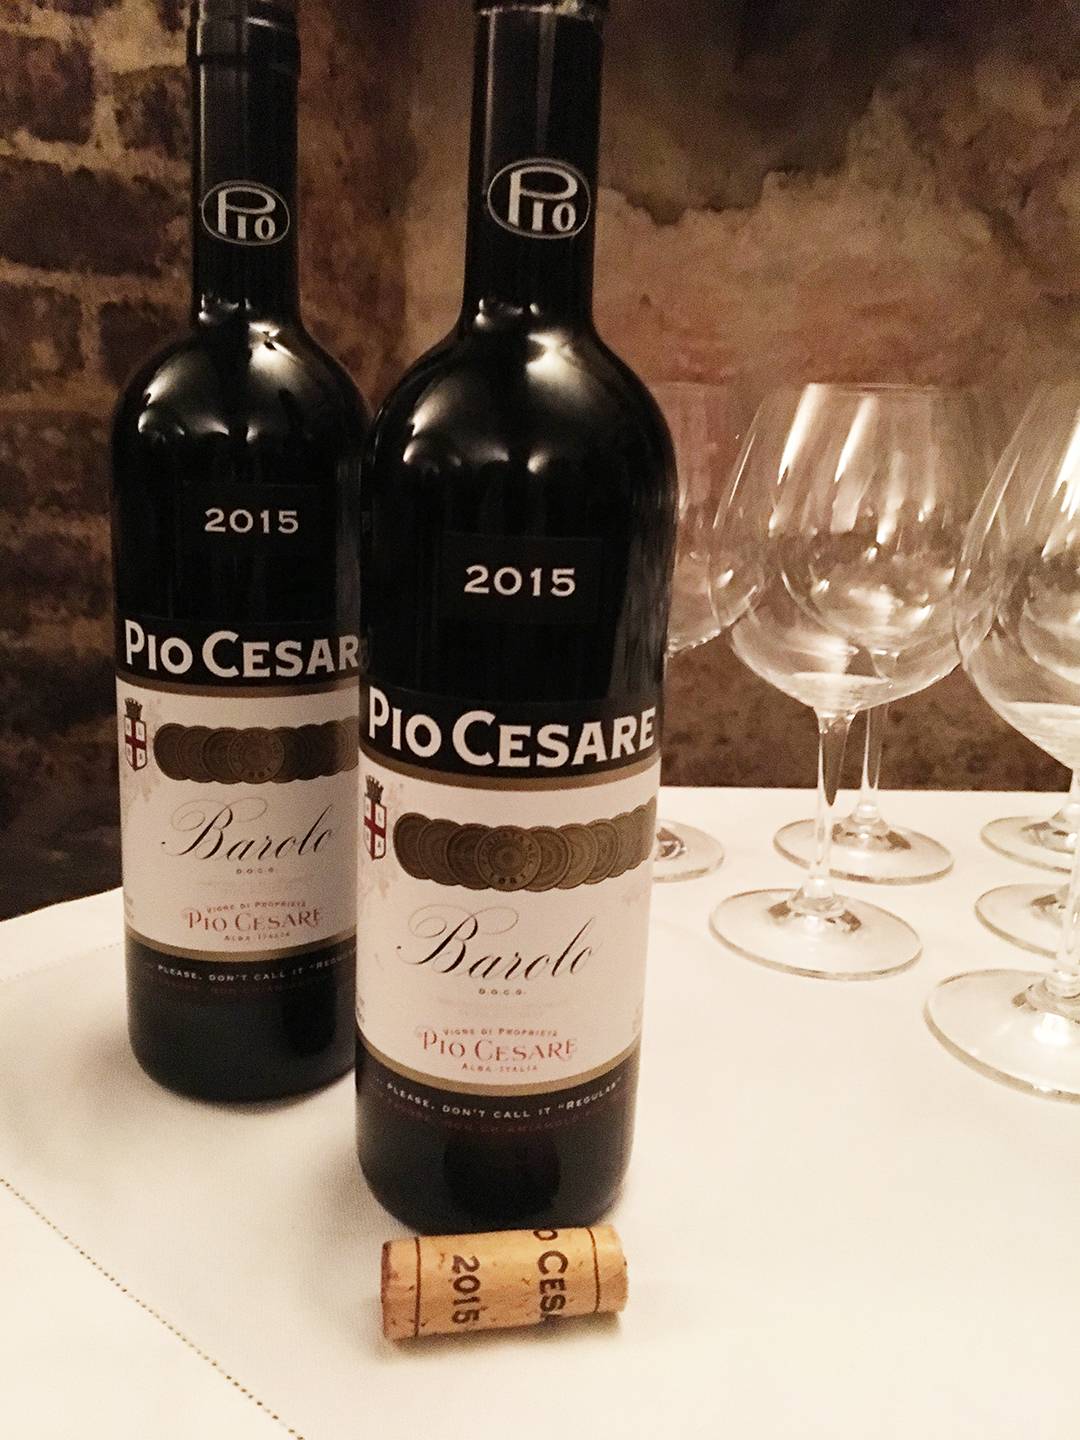 Two bottles of Pio Cesare Barolo 2015